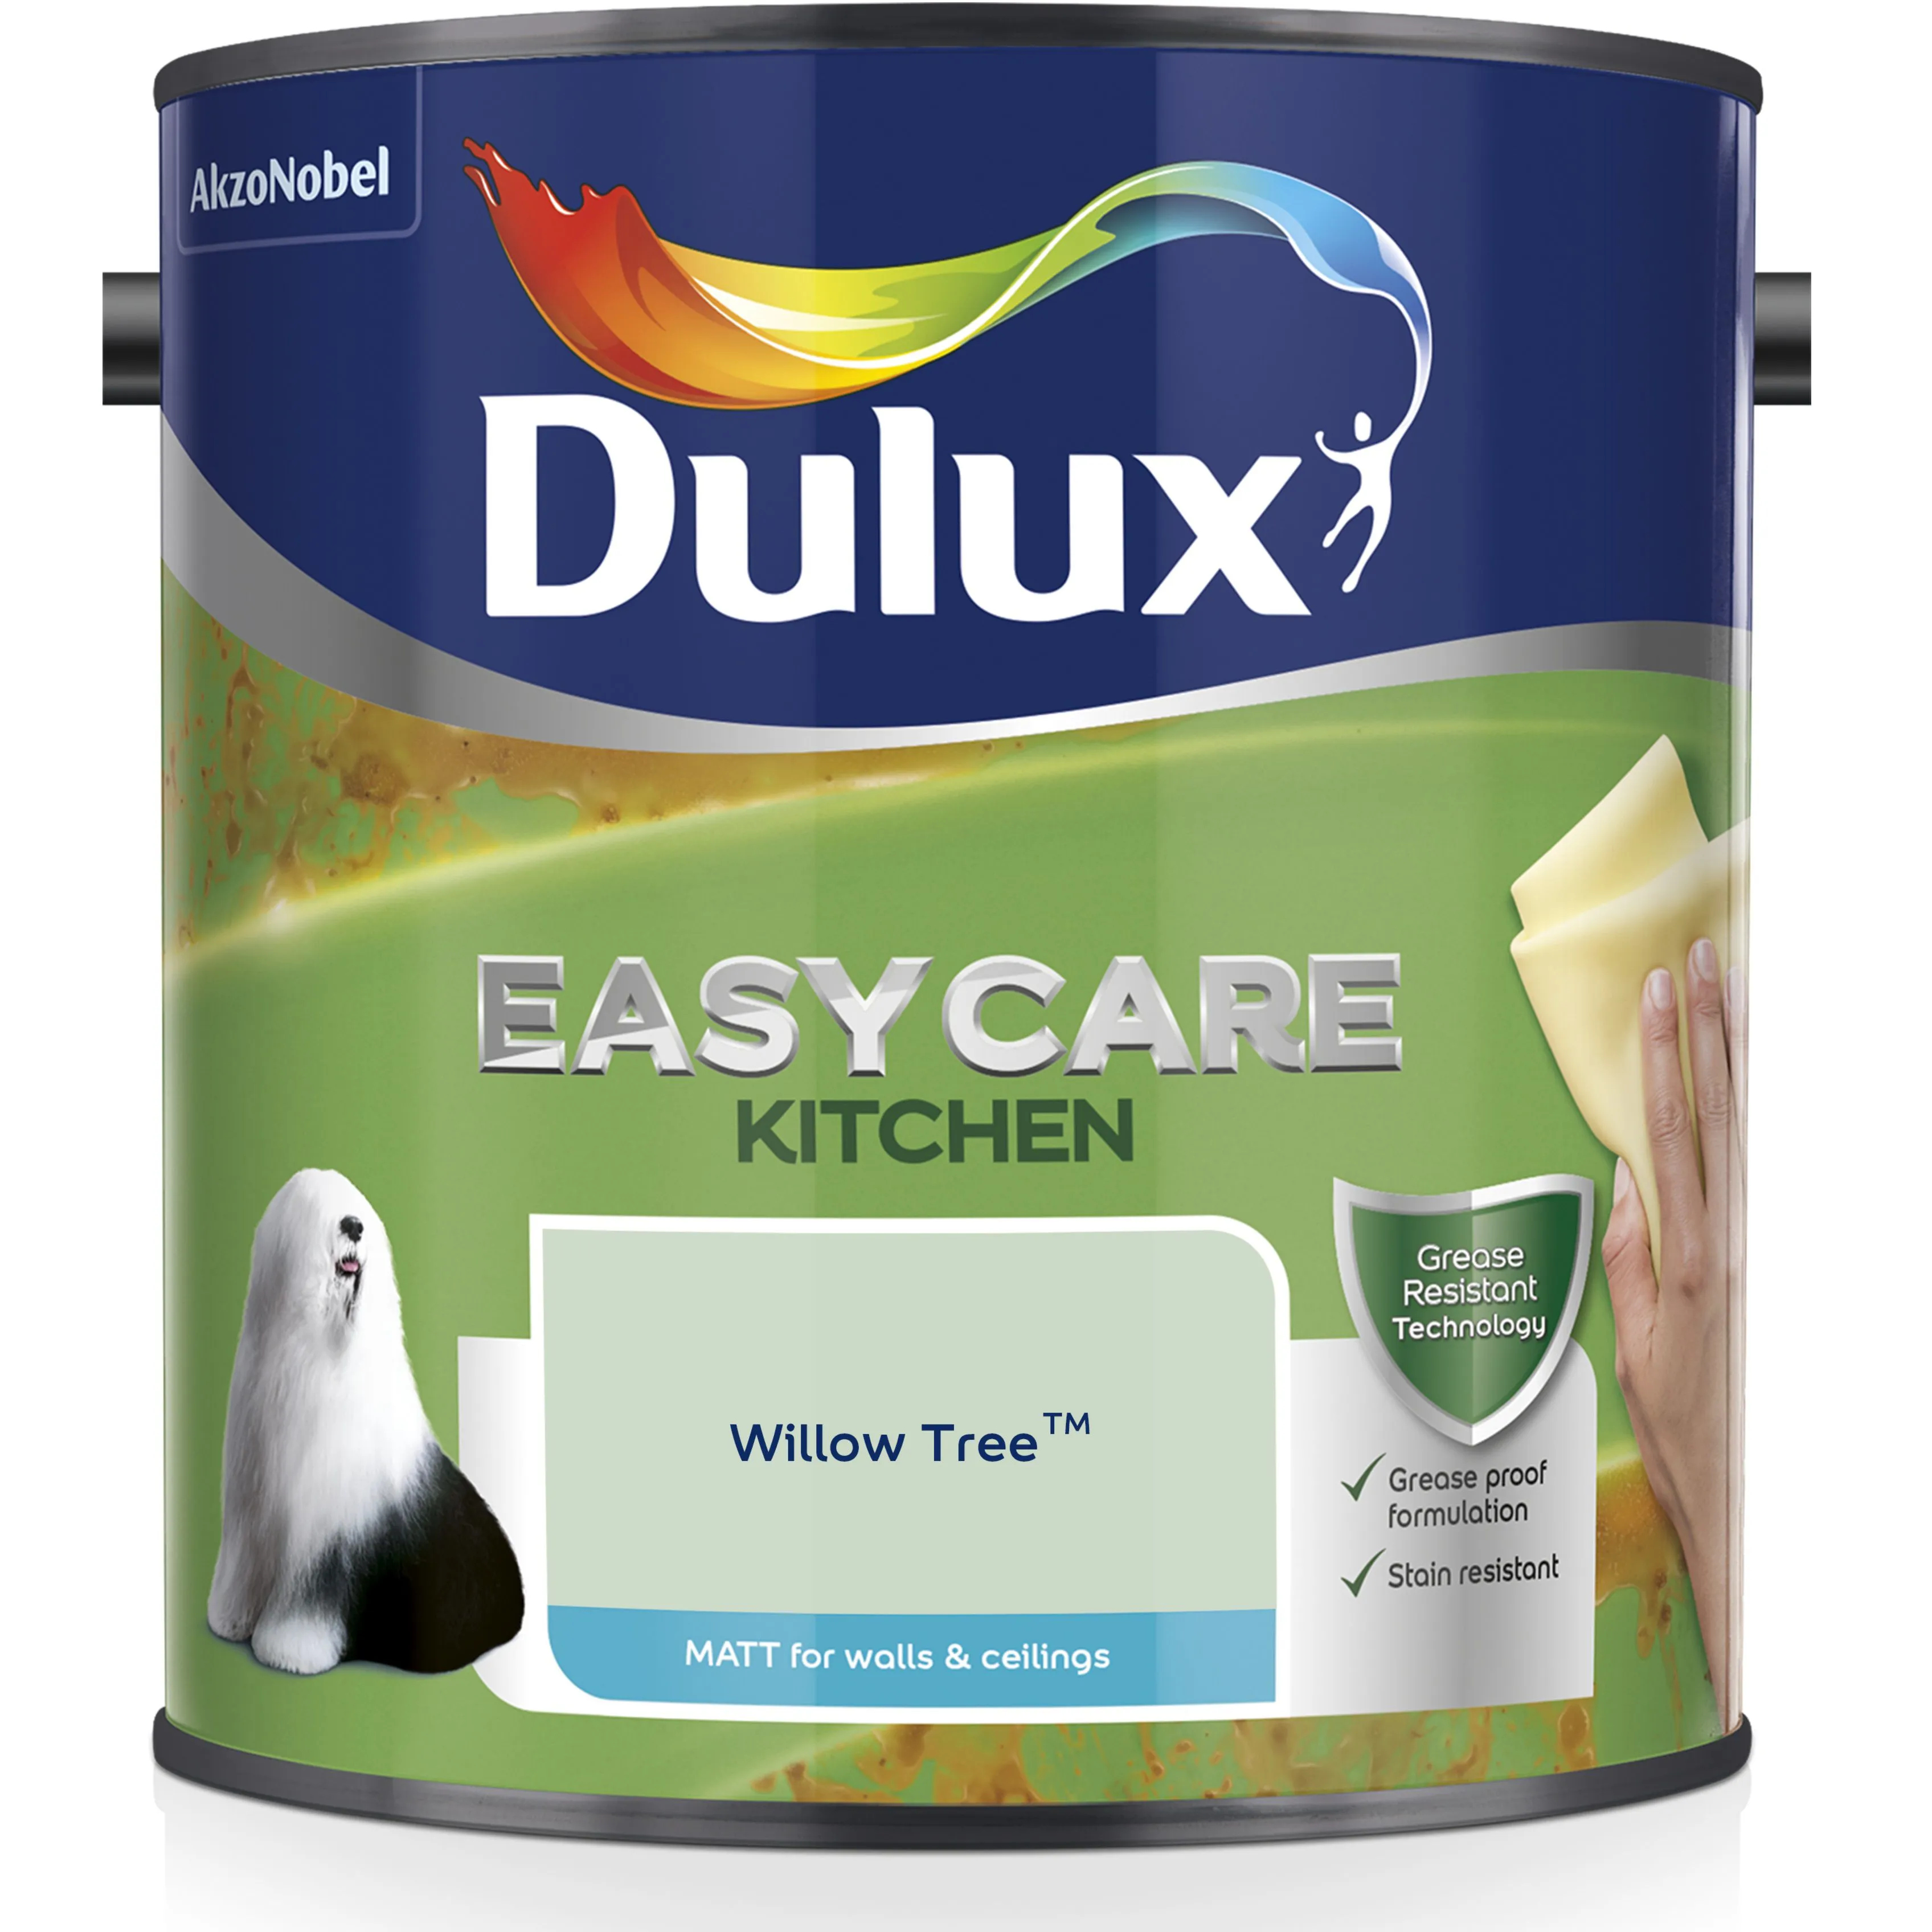 Dulux Easycare Kitchen Willow tree Matt Emulsion paint, 2.5L